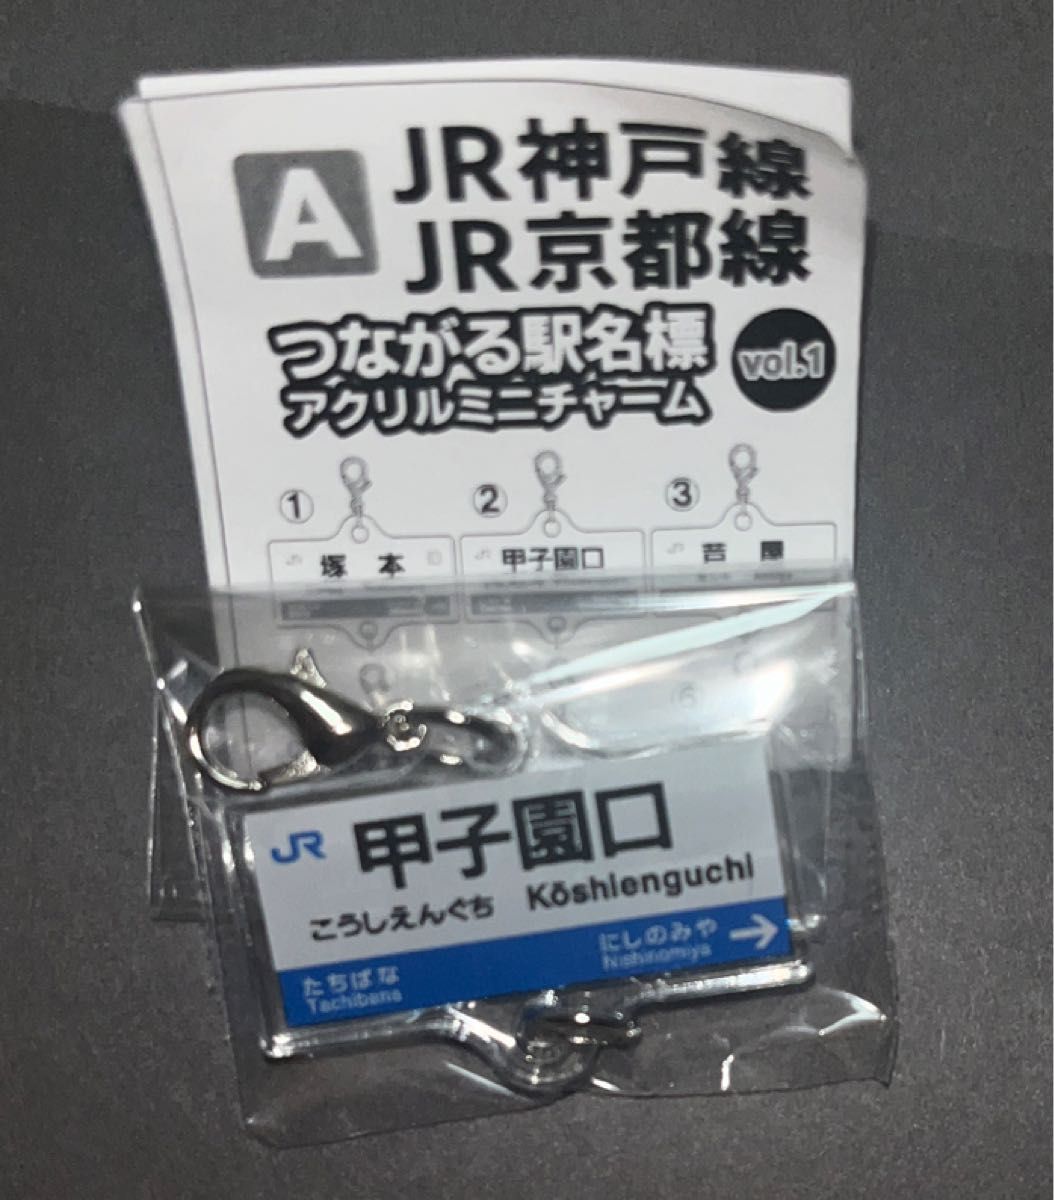 JR神戸線 JR京都線 つながる駅名標 アクリルミニチャーム  Vol.1 甲子園口